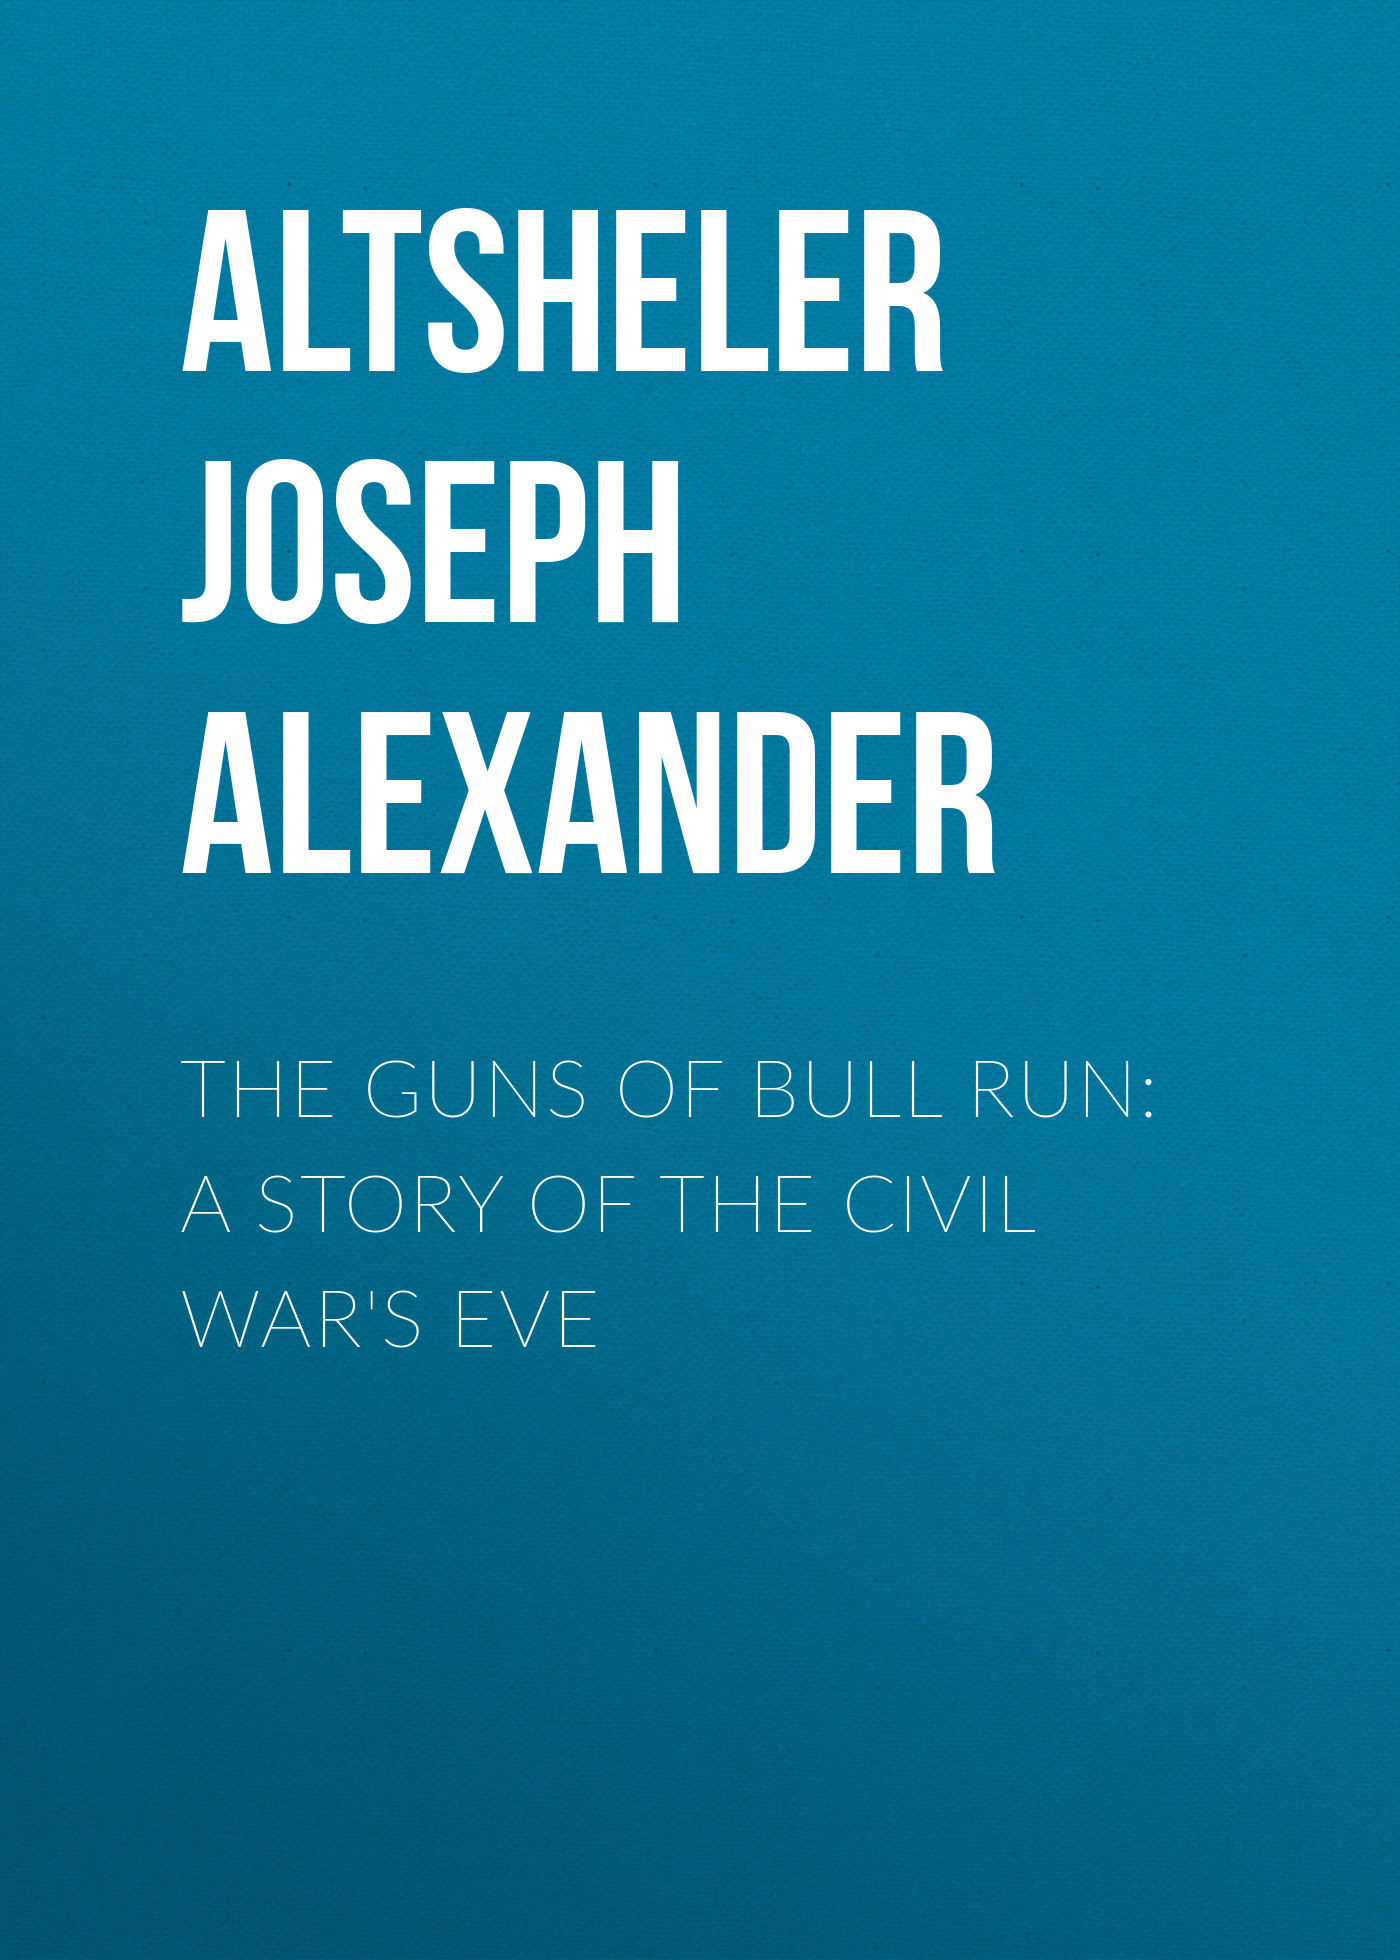 Altsheler Joseph Alexander The Guns of Bull Run: A Story of the Civil War's Eve